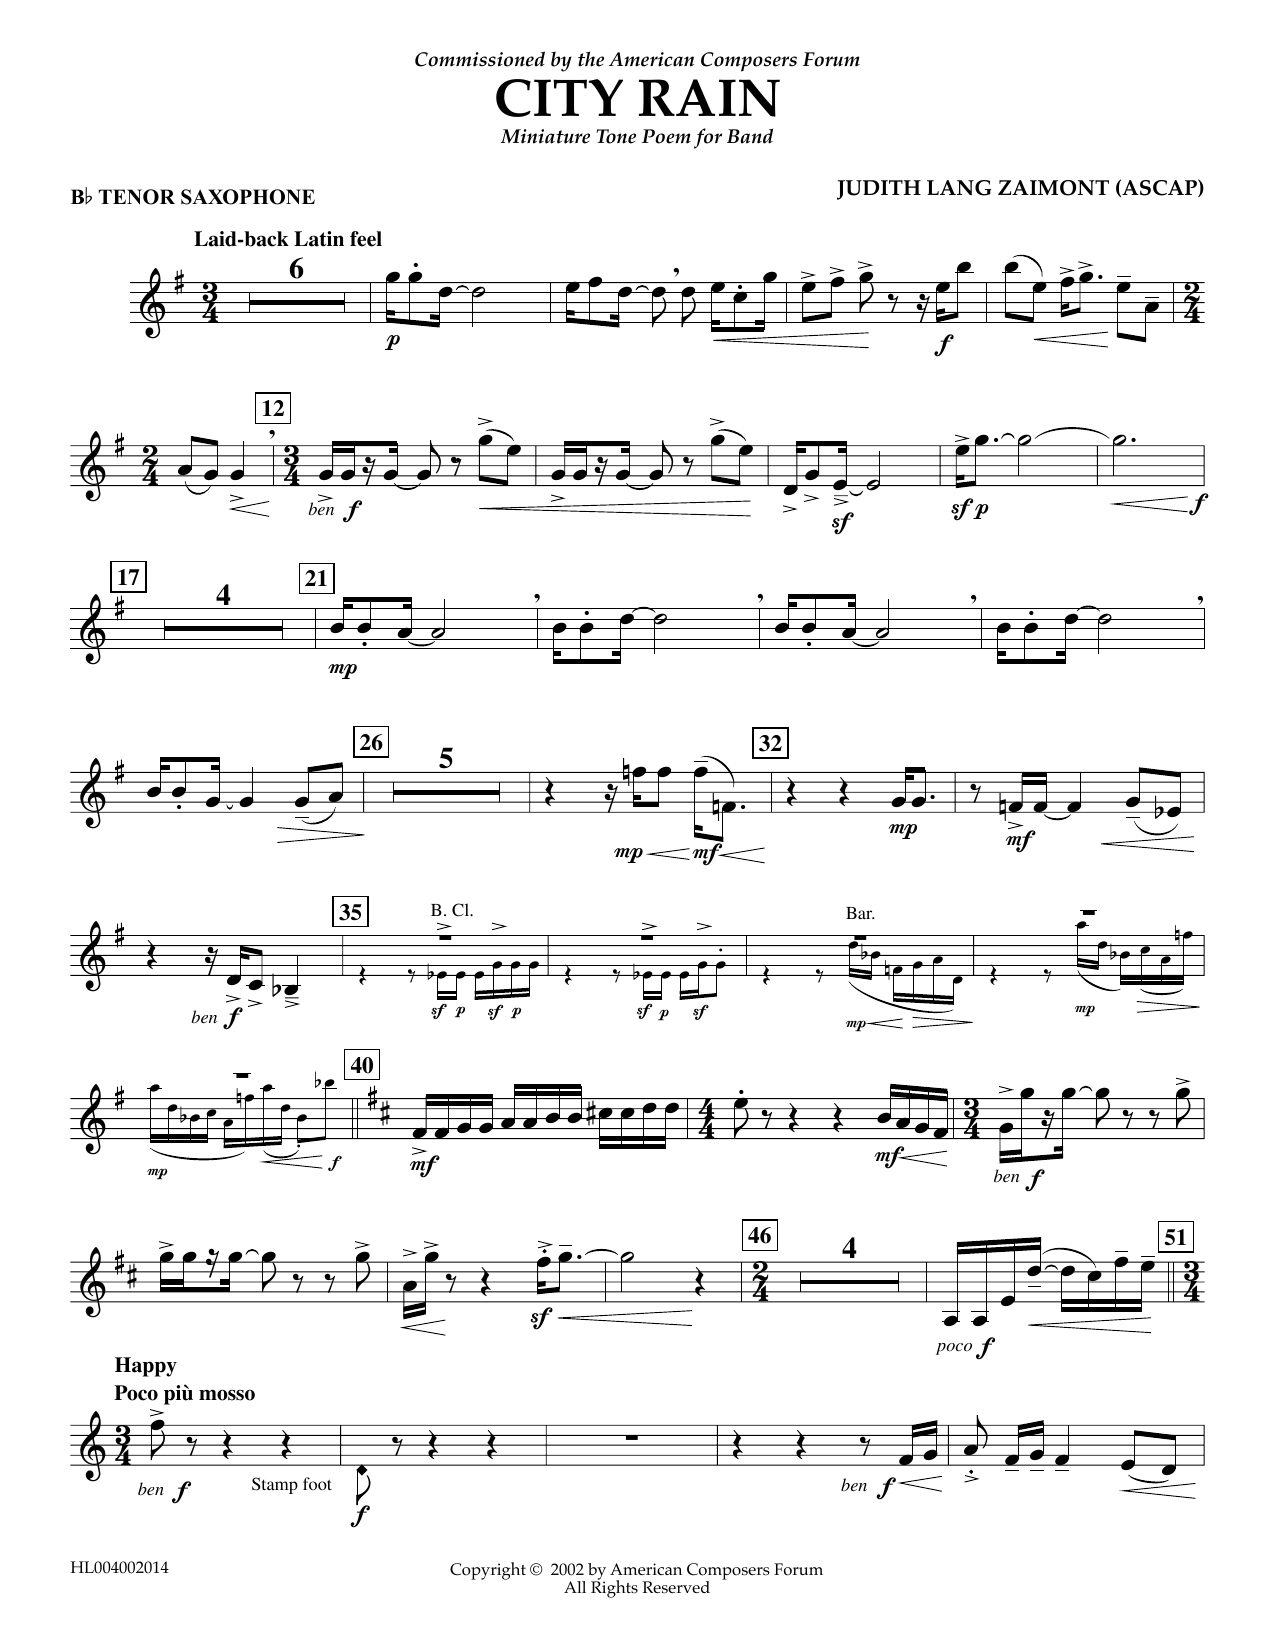 Download Judith Zaimont City Rain - Bb Tenor Saxophone Sheet Music